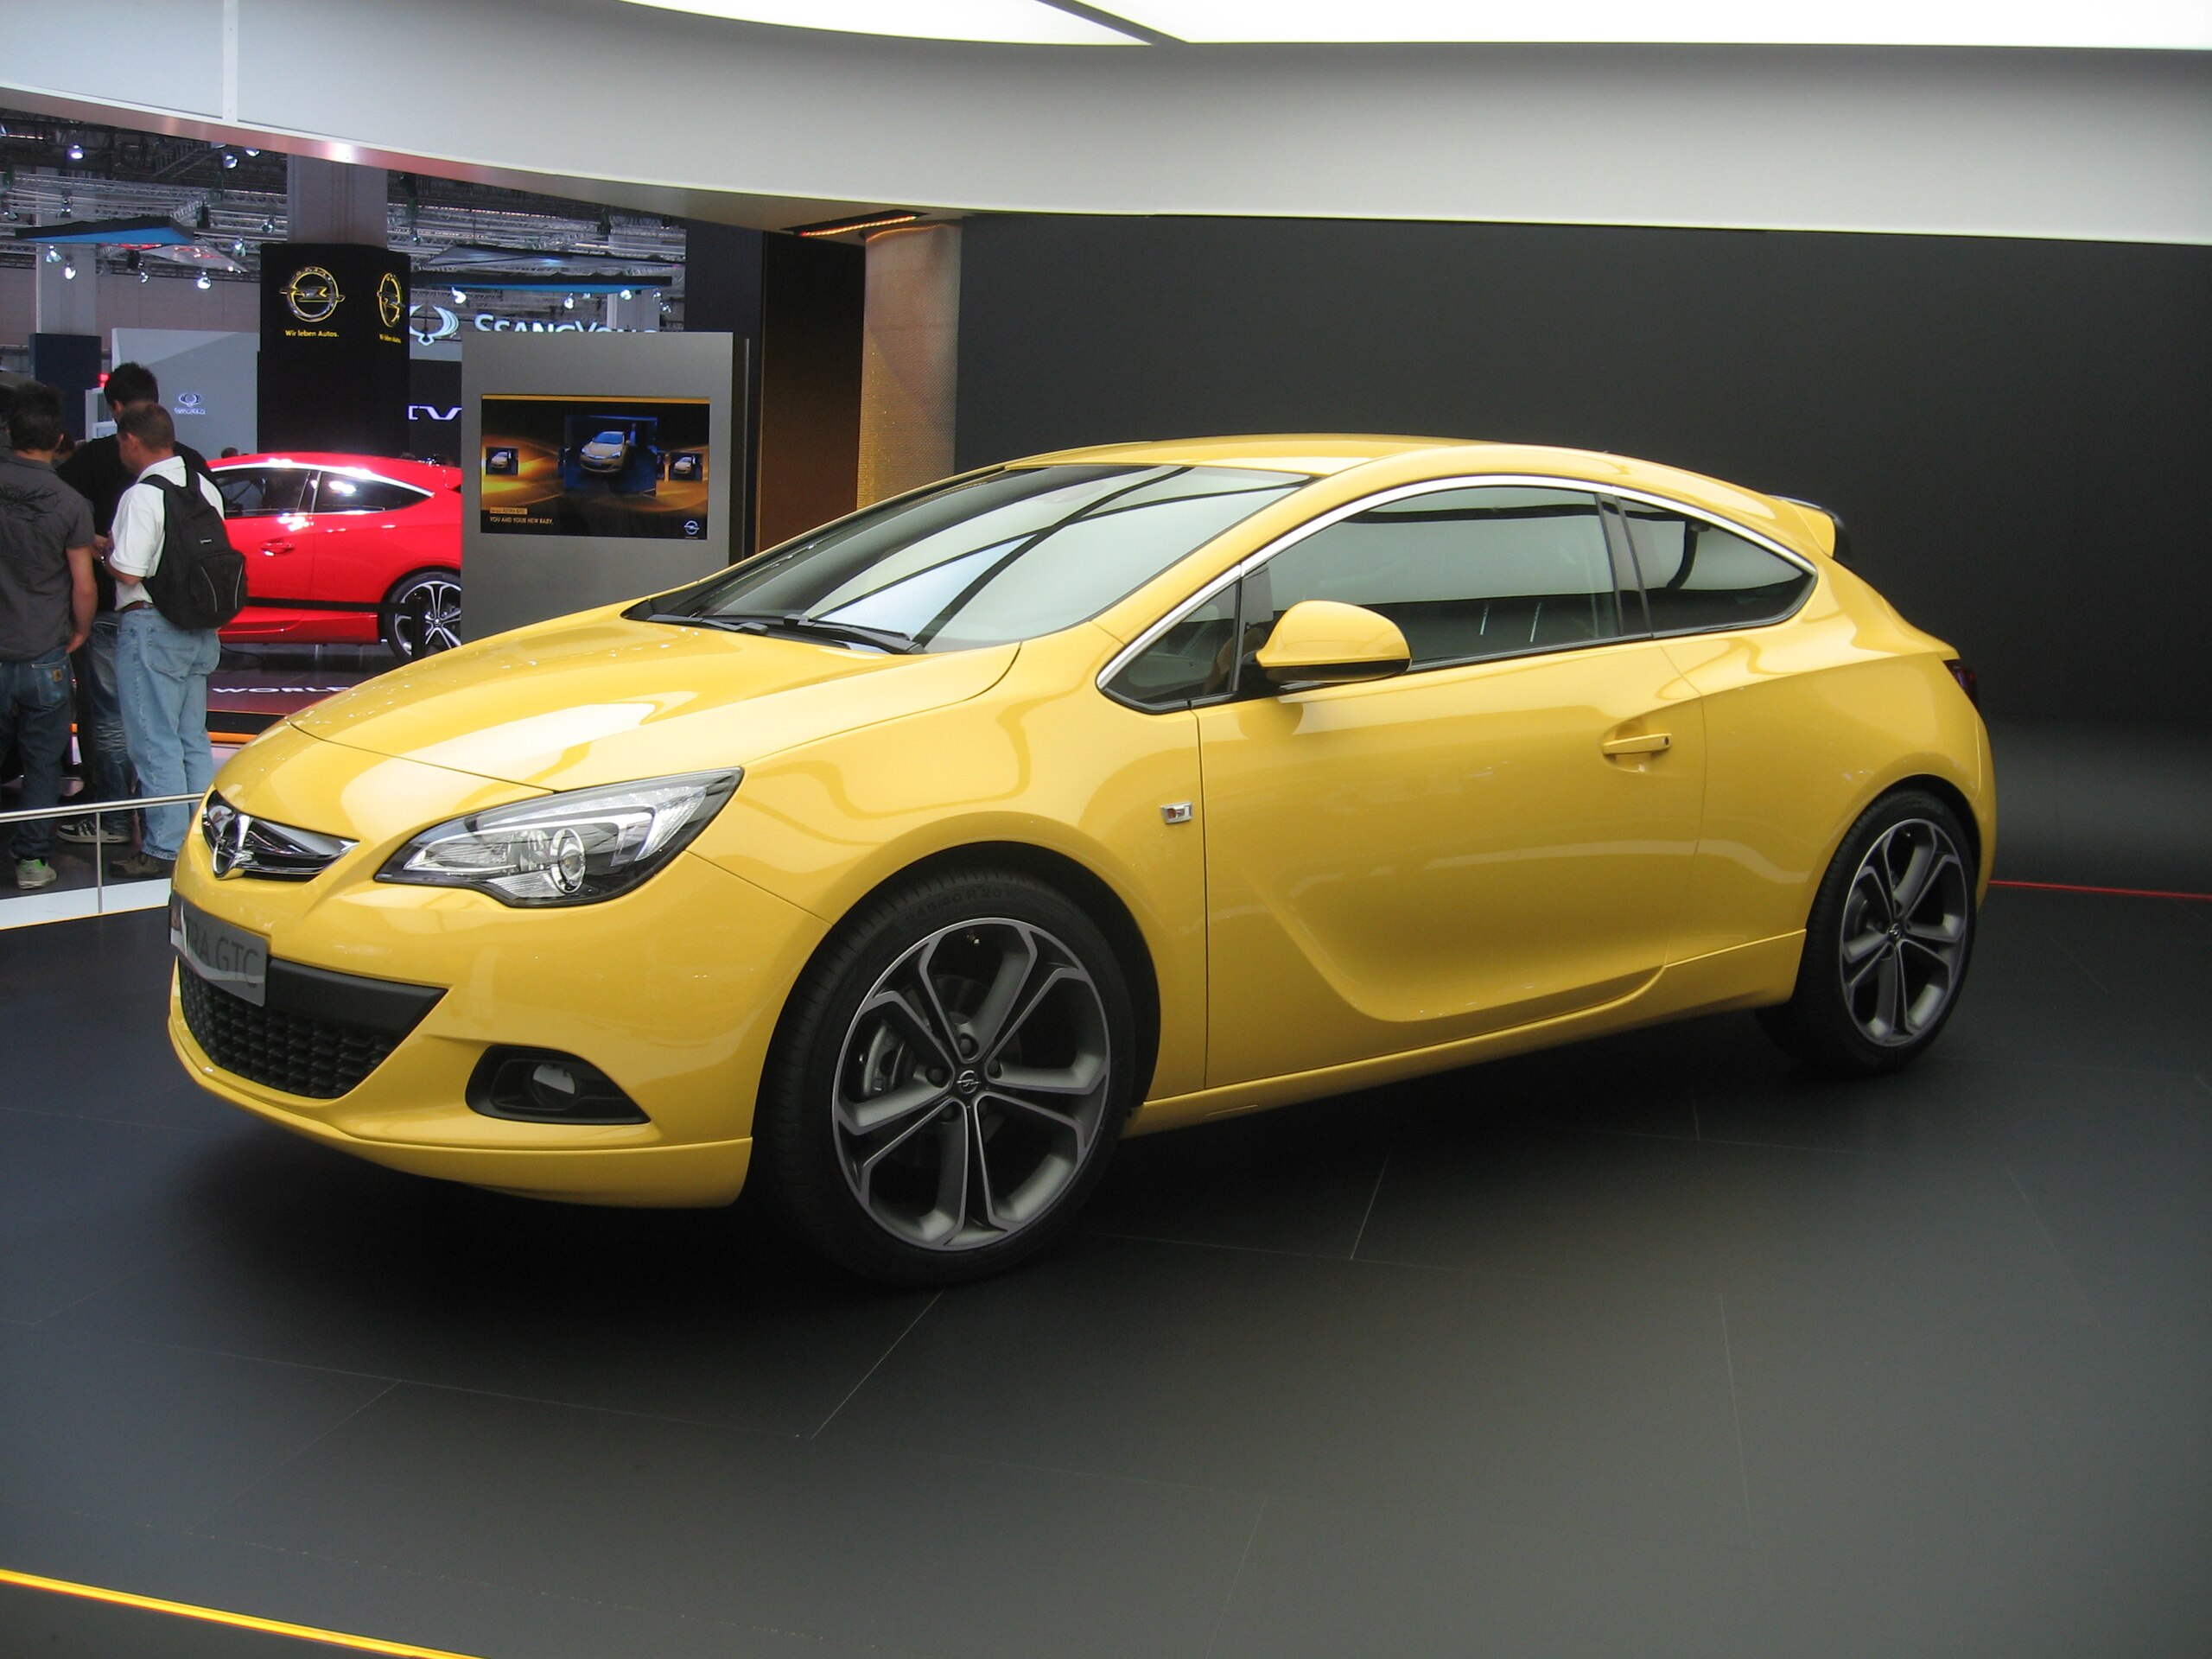 https://upload.wikimedia.org/wikipedia/commons/thumb/1/1d/Opel_Astra_J_GTC_Front-view.JPG/2560px-Opel_Astra_J_GTC_Front-view.JPG